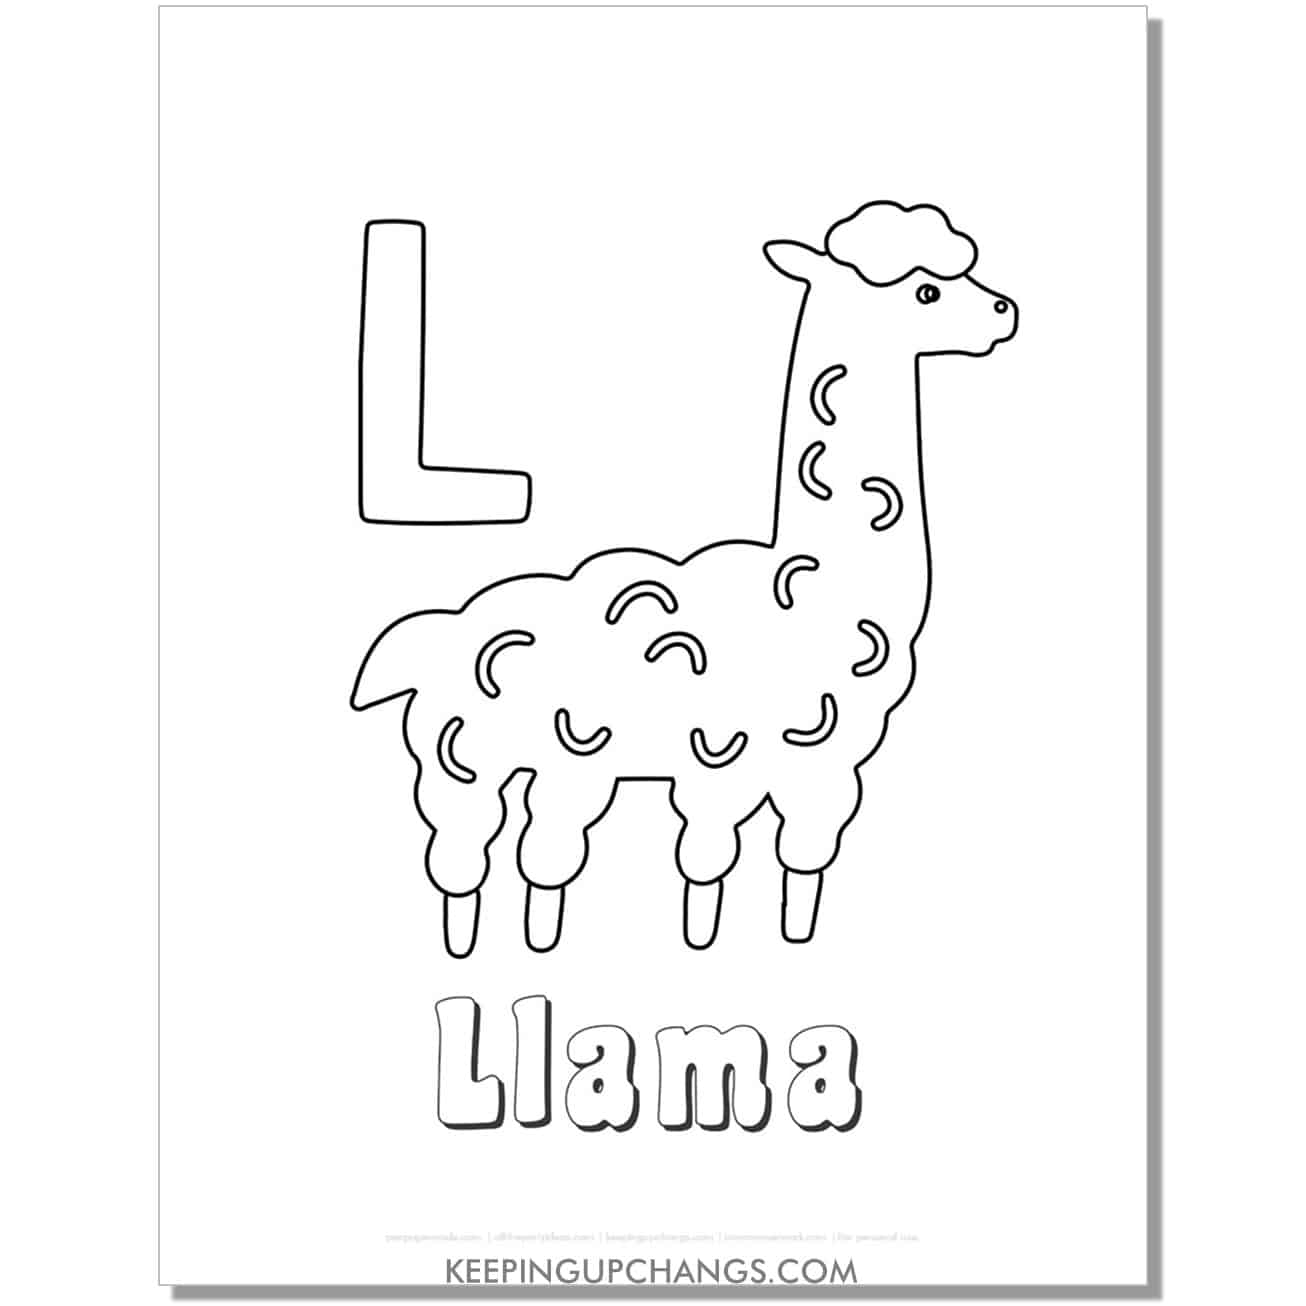 fun abc l coloring page with llama hand drawing.